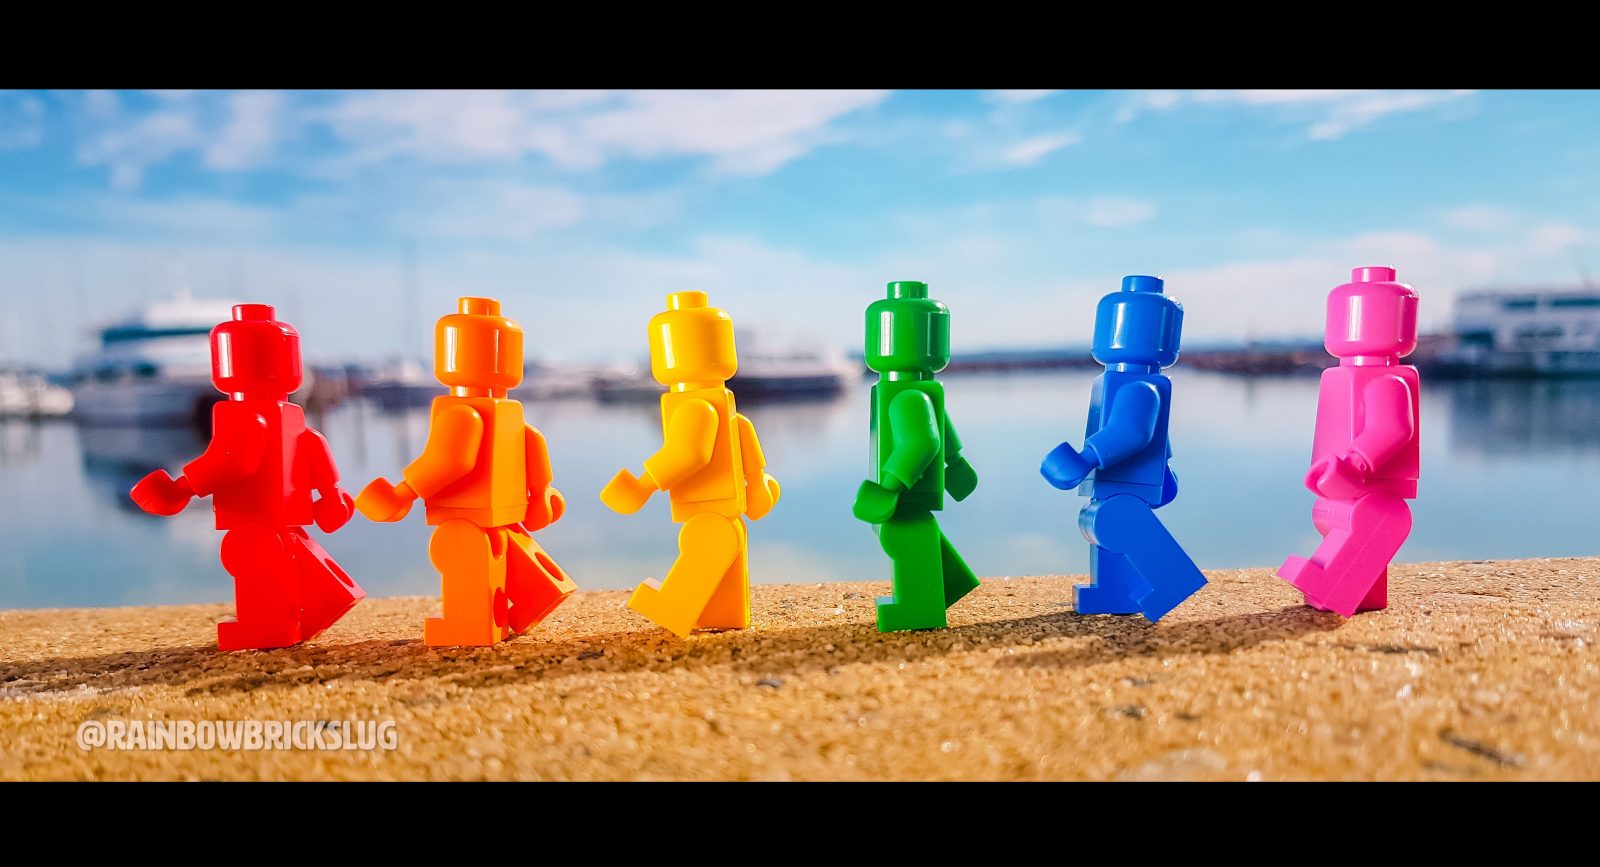 Rainbow Bricks LEGO User Group